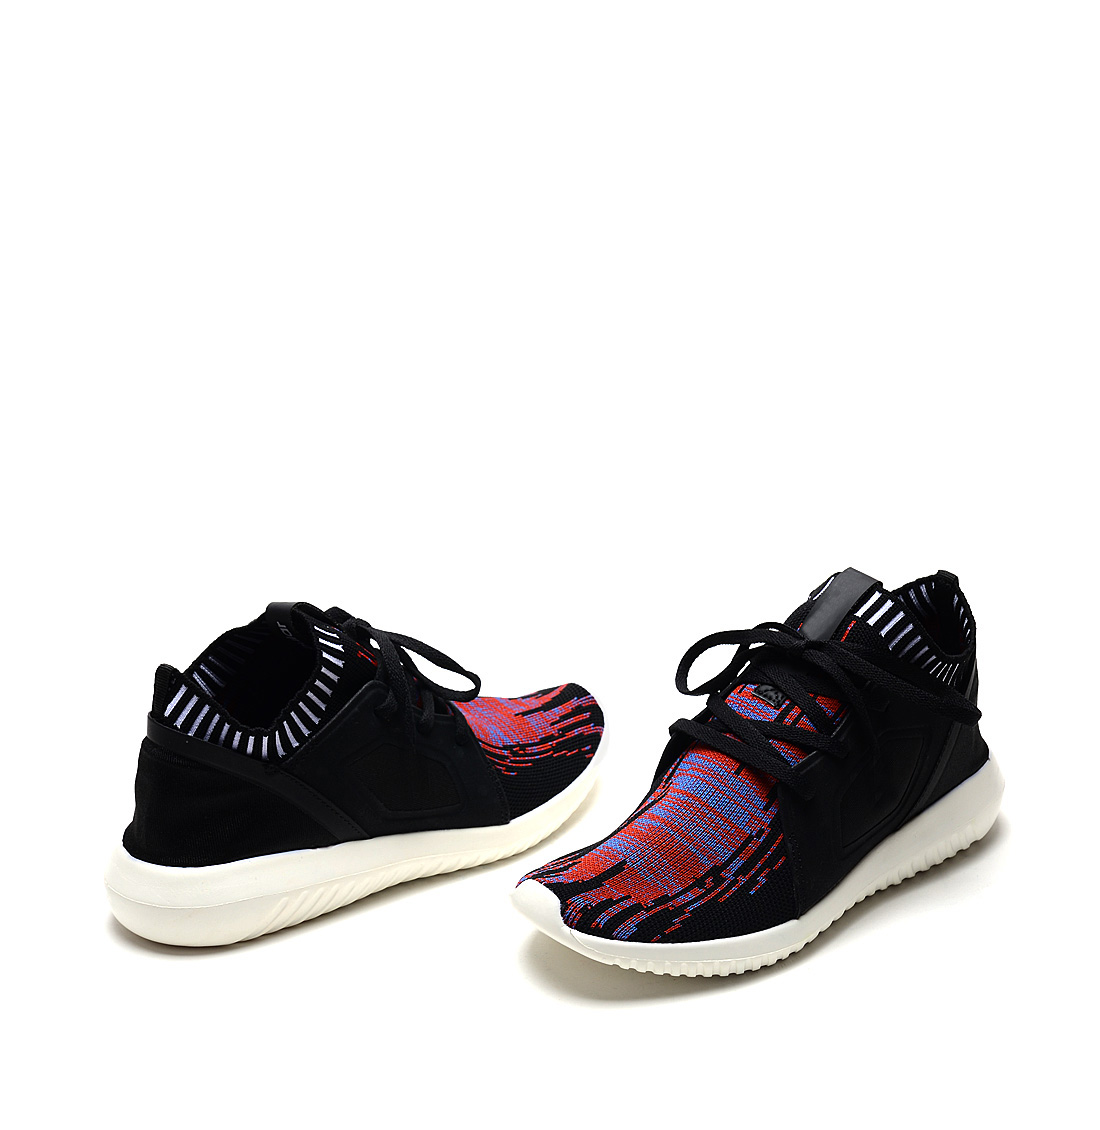 [HKAU]运动风简约织物运动鞋(尺码标准)
编号:A3530K1A77